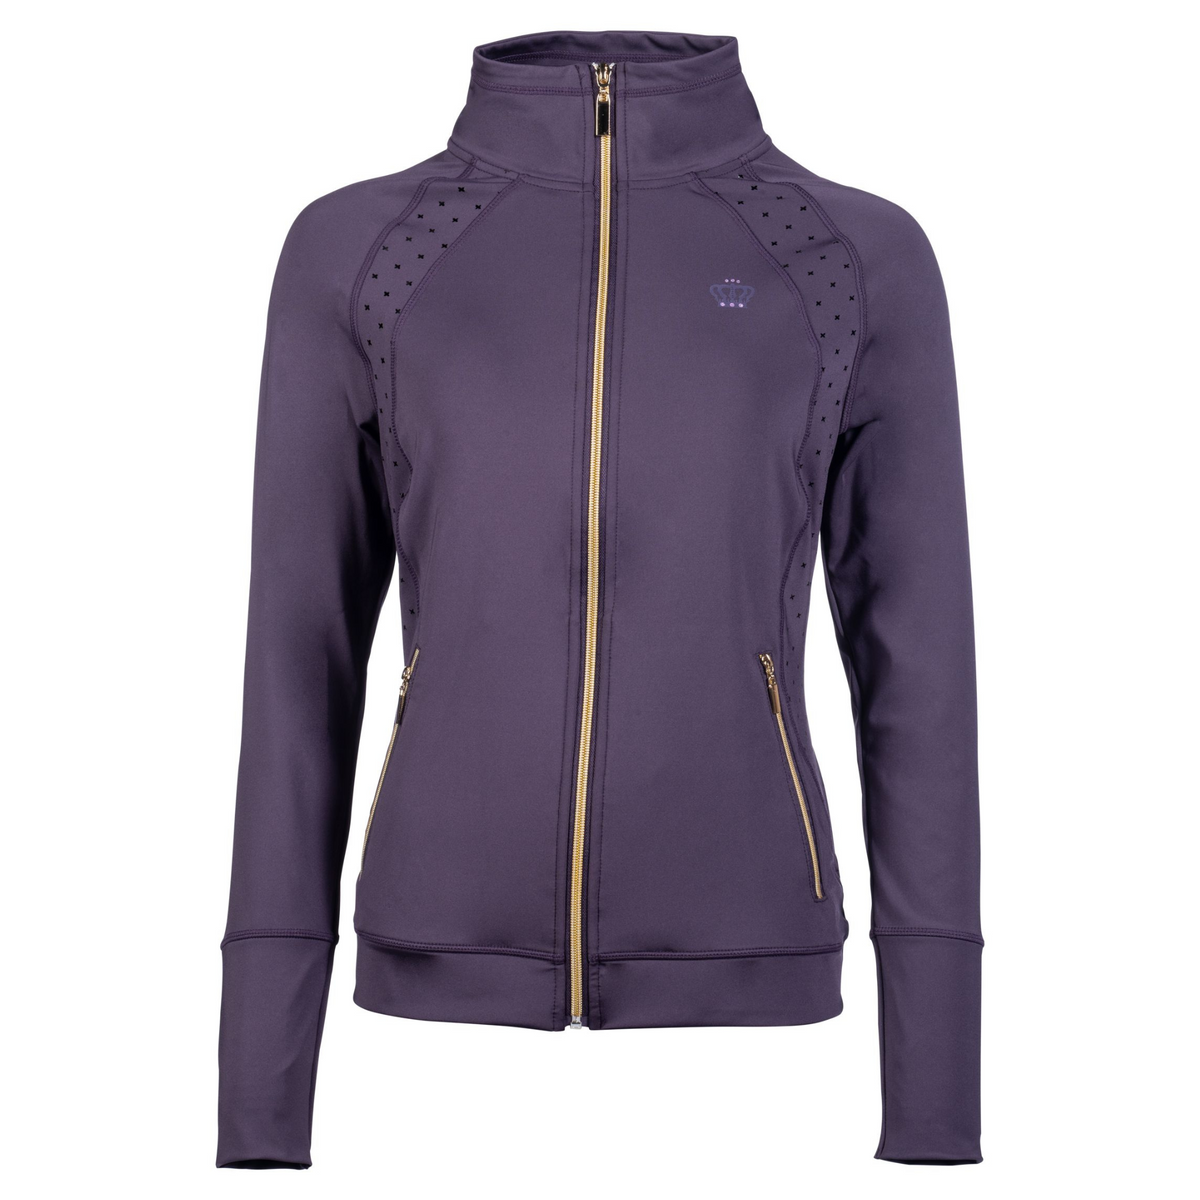 Dark purple jacket with gold zip